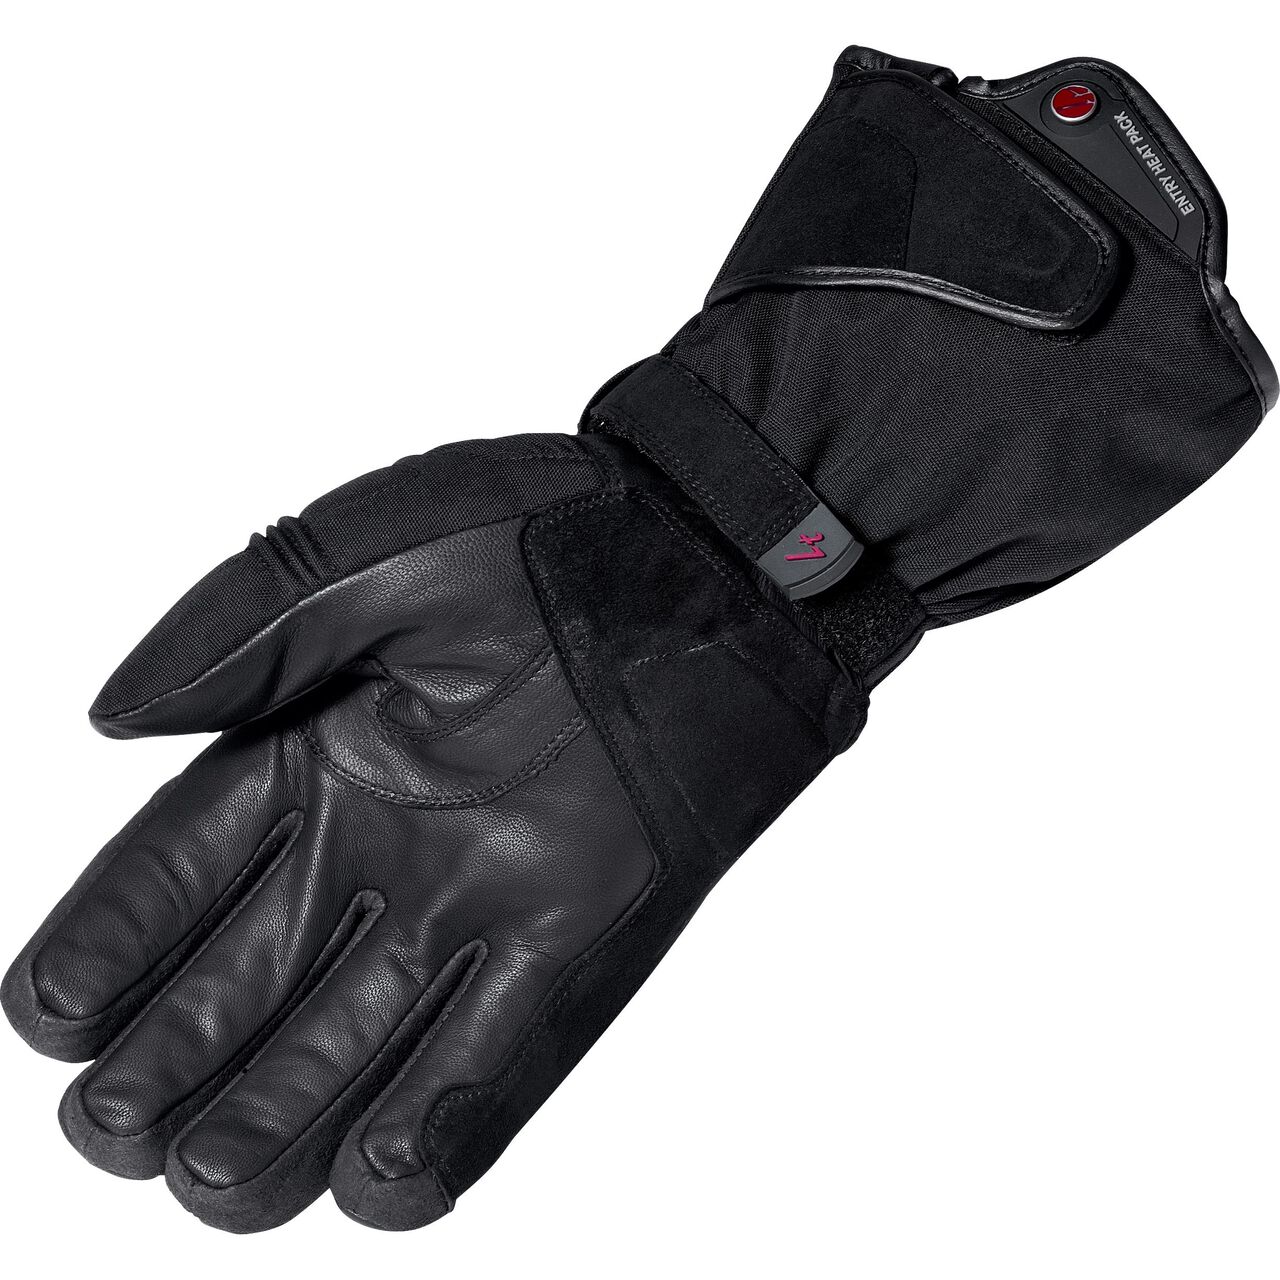 Tonale winter glove black